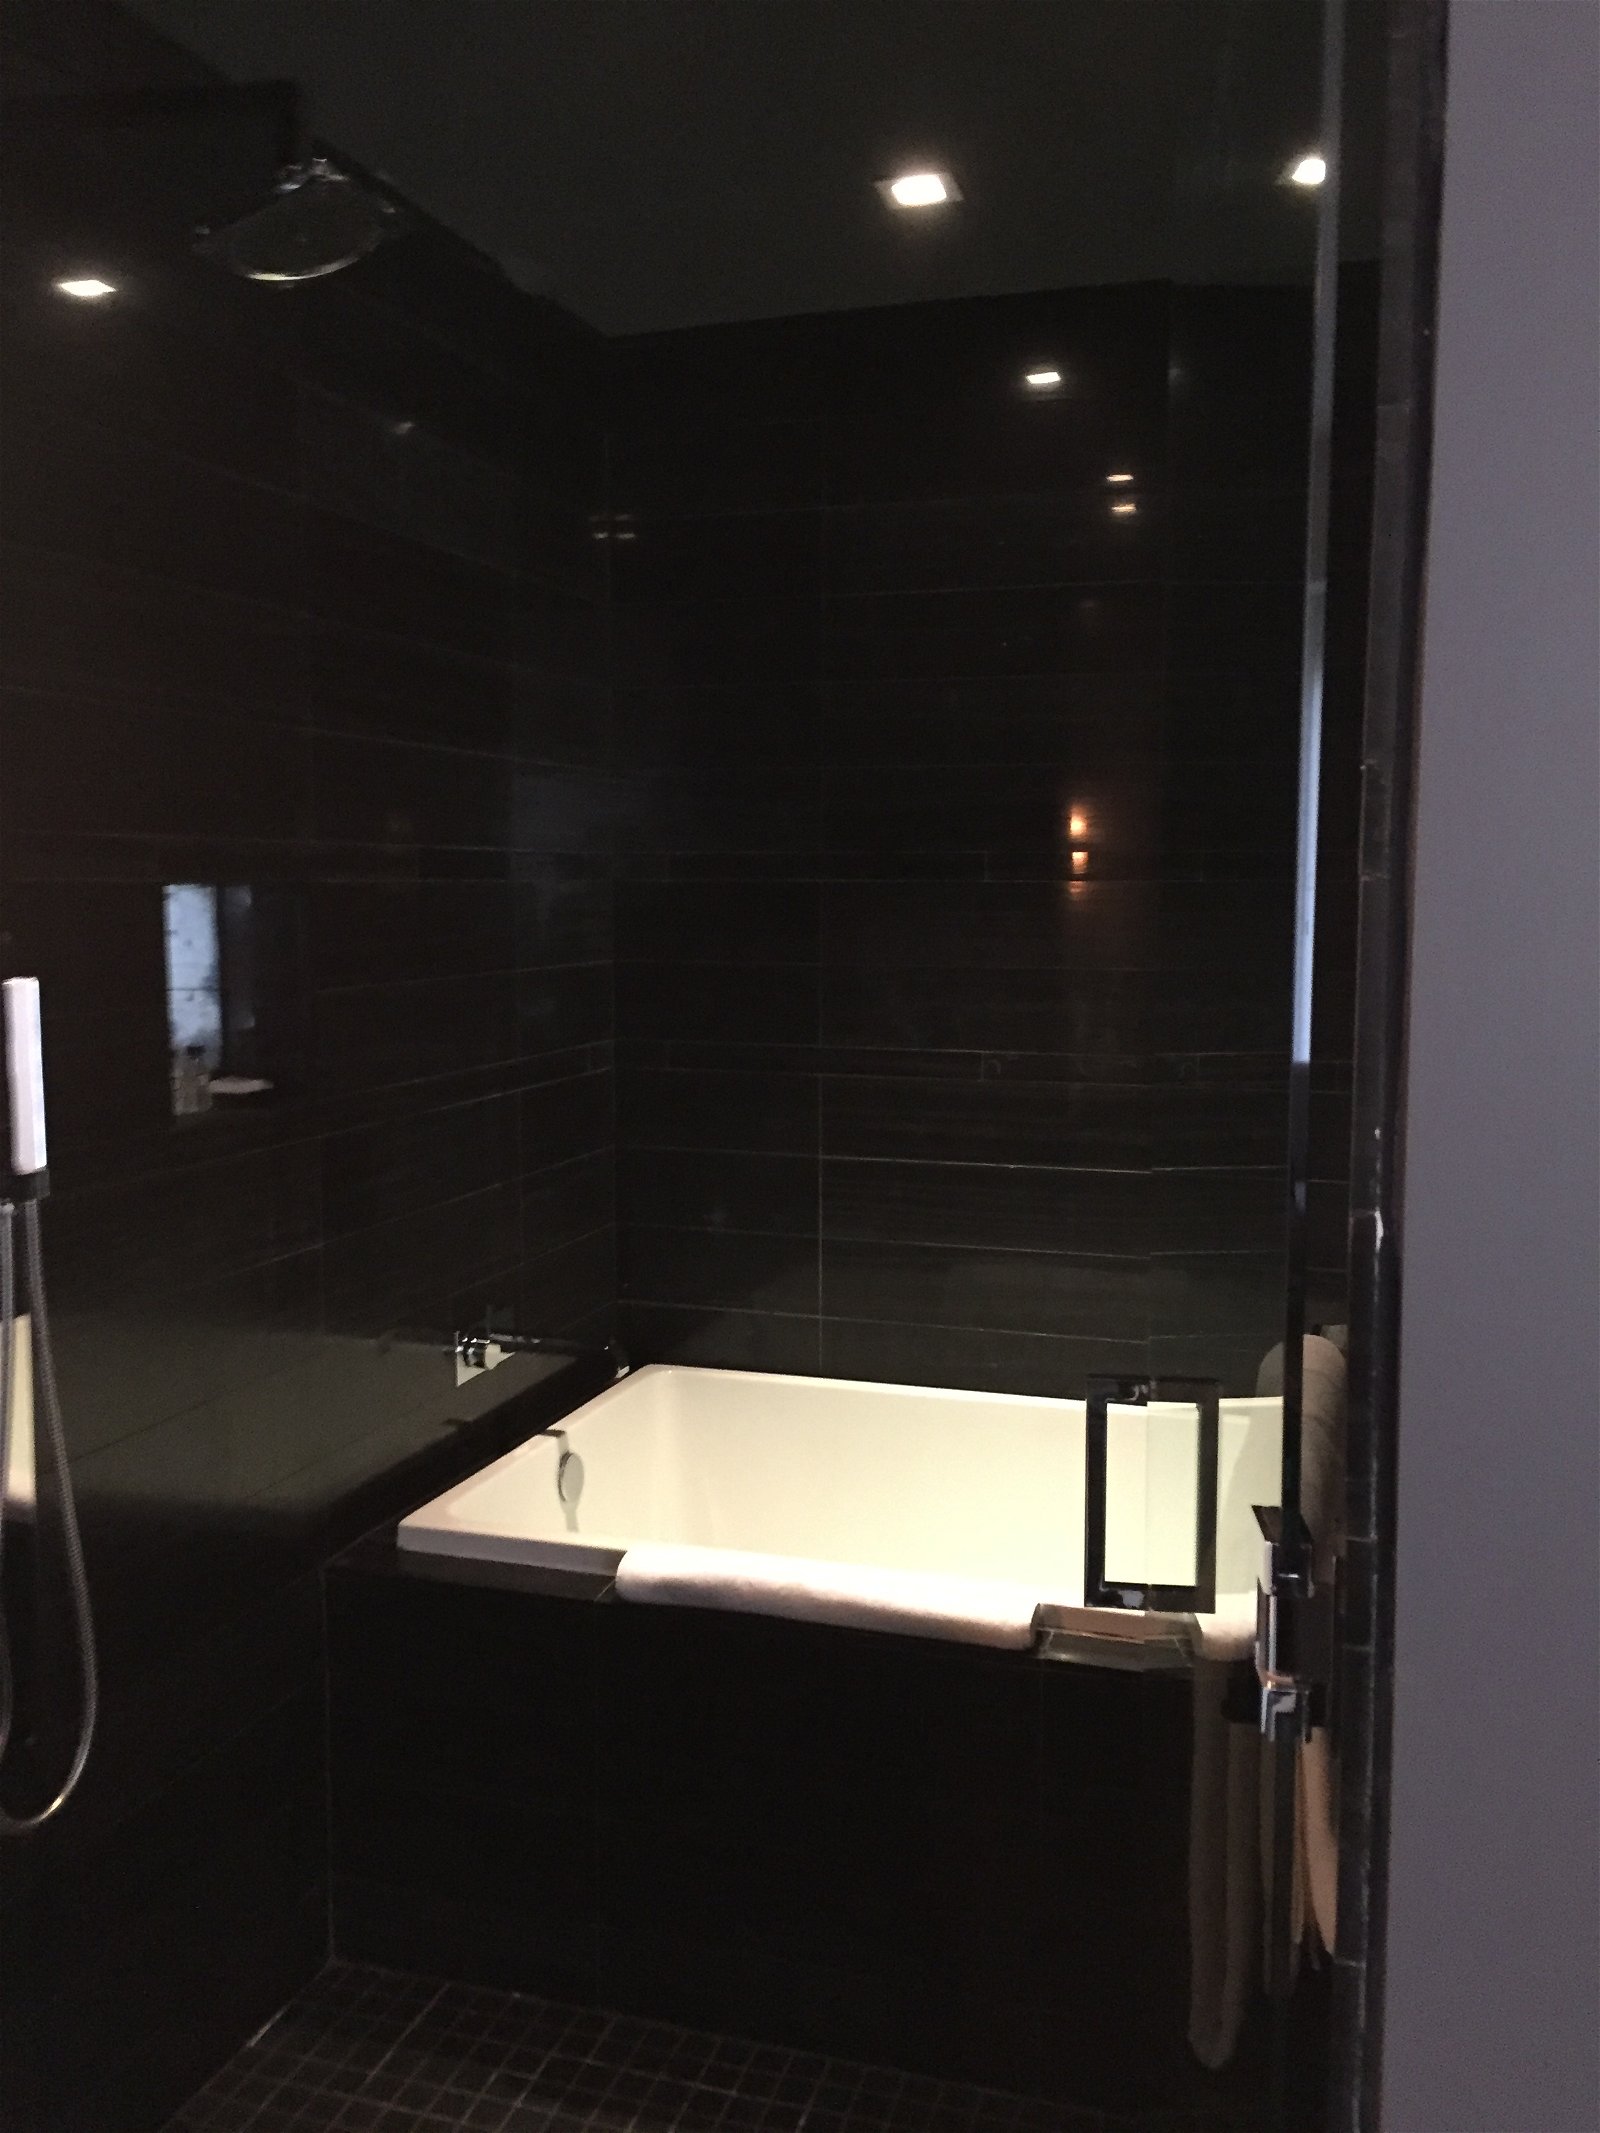 Andaz Suite shower/tub room